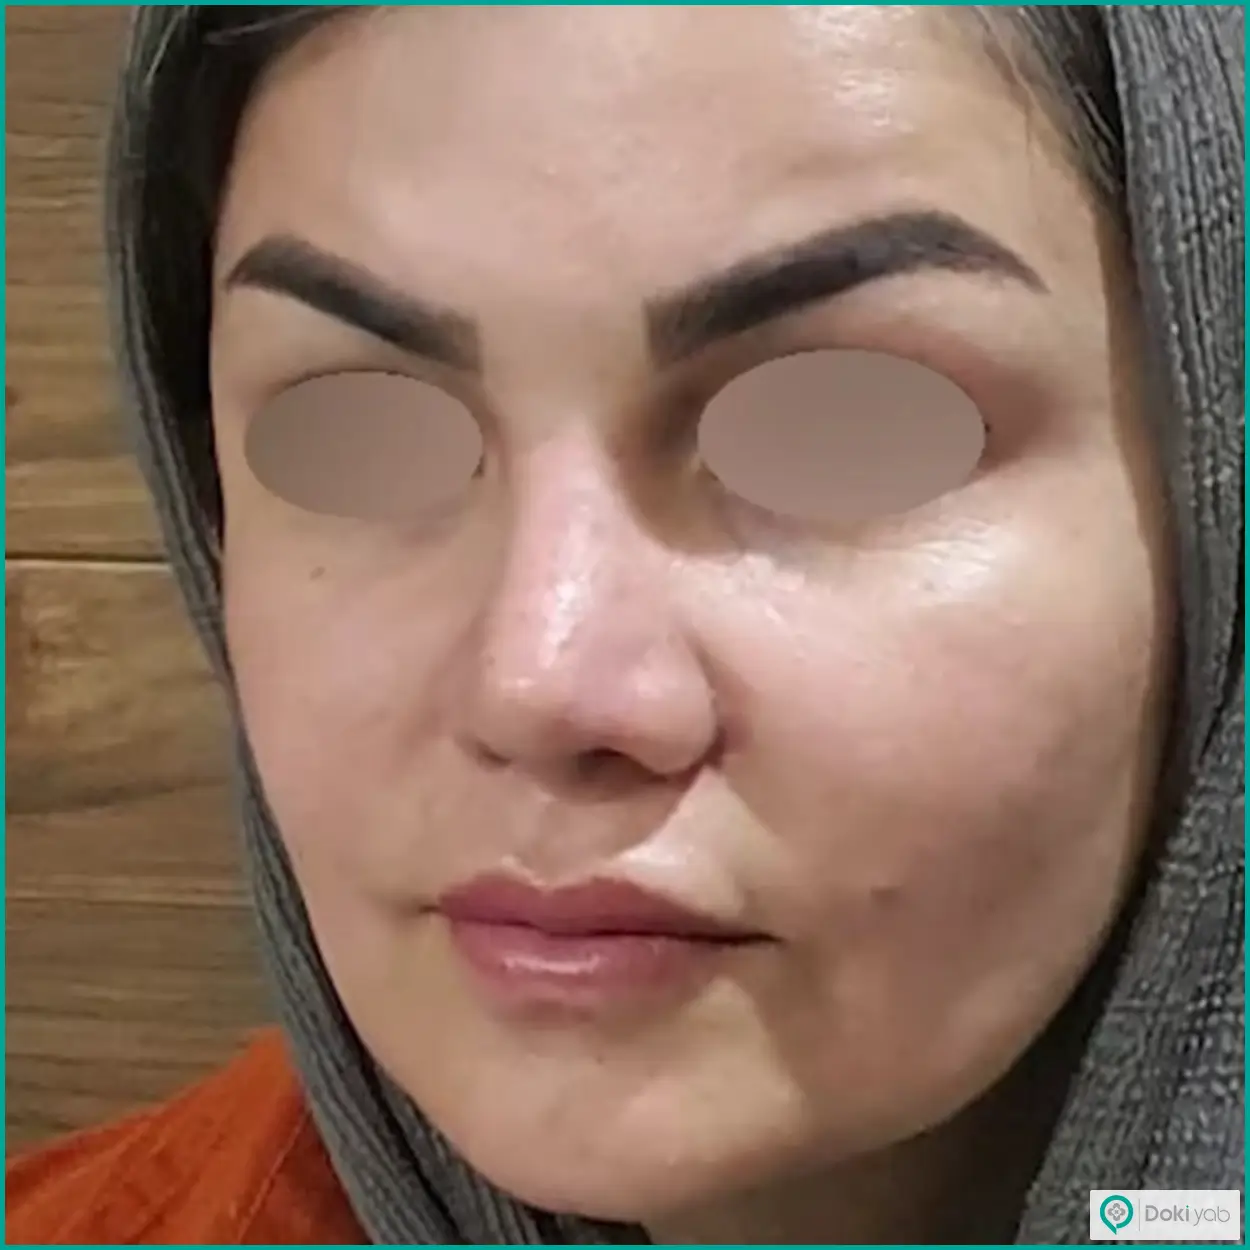 نمونه جراحی بینی طبیعی دکتر رضا کبودخانی جراح بینی در شیراز